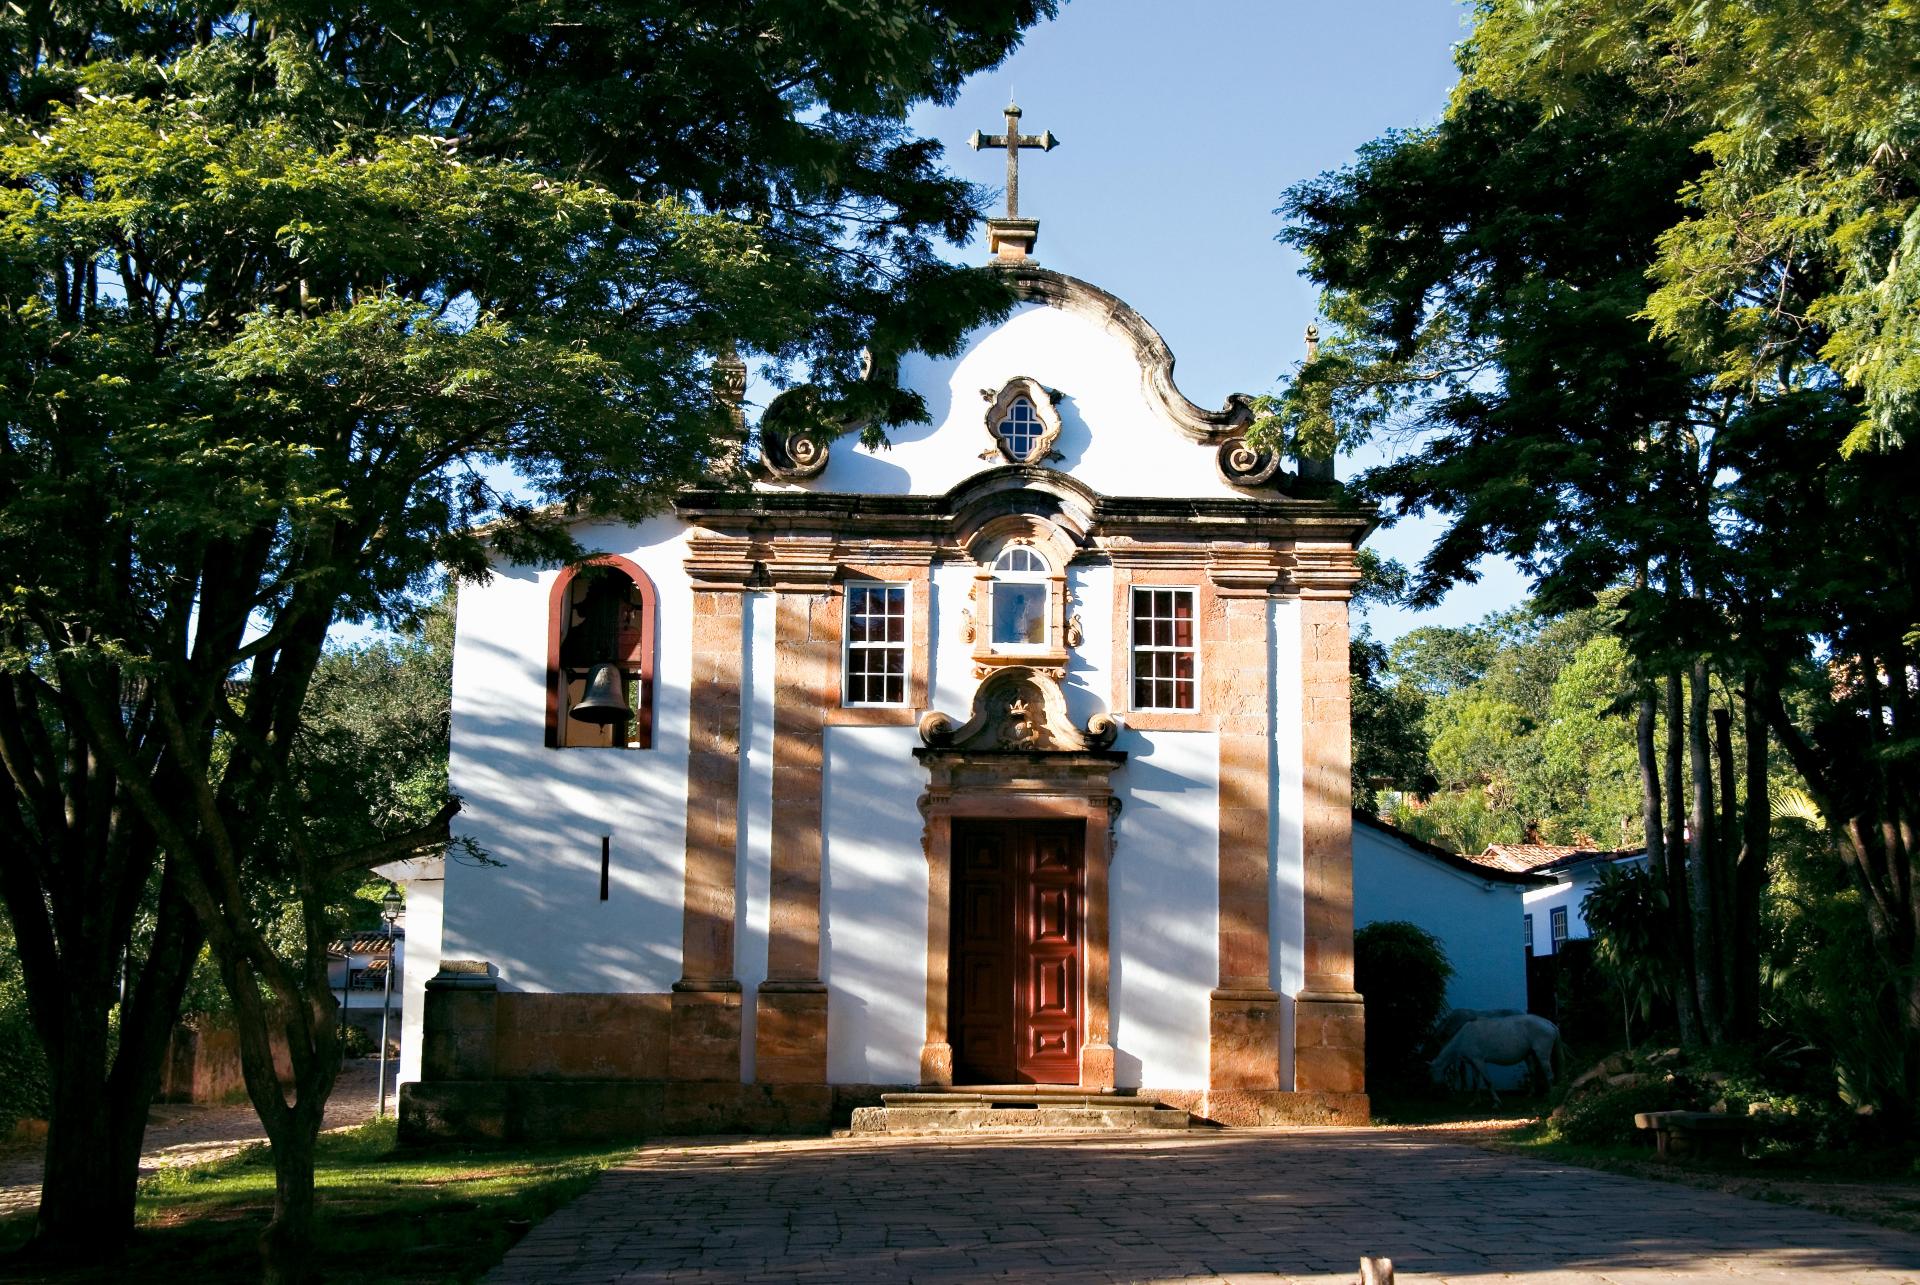 The colonial town of Tiradentes in the interior of Minas Gerais